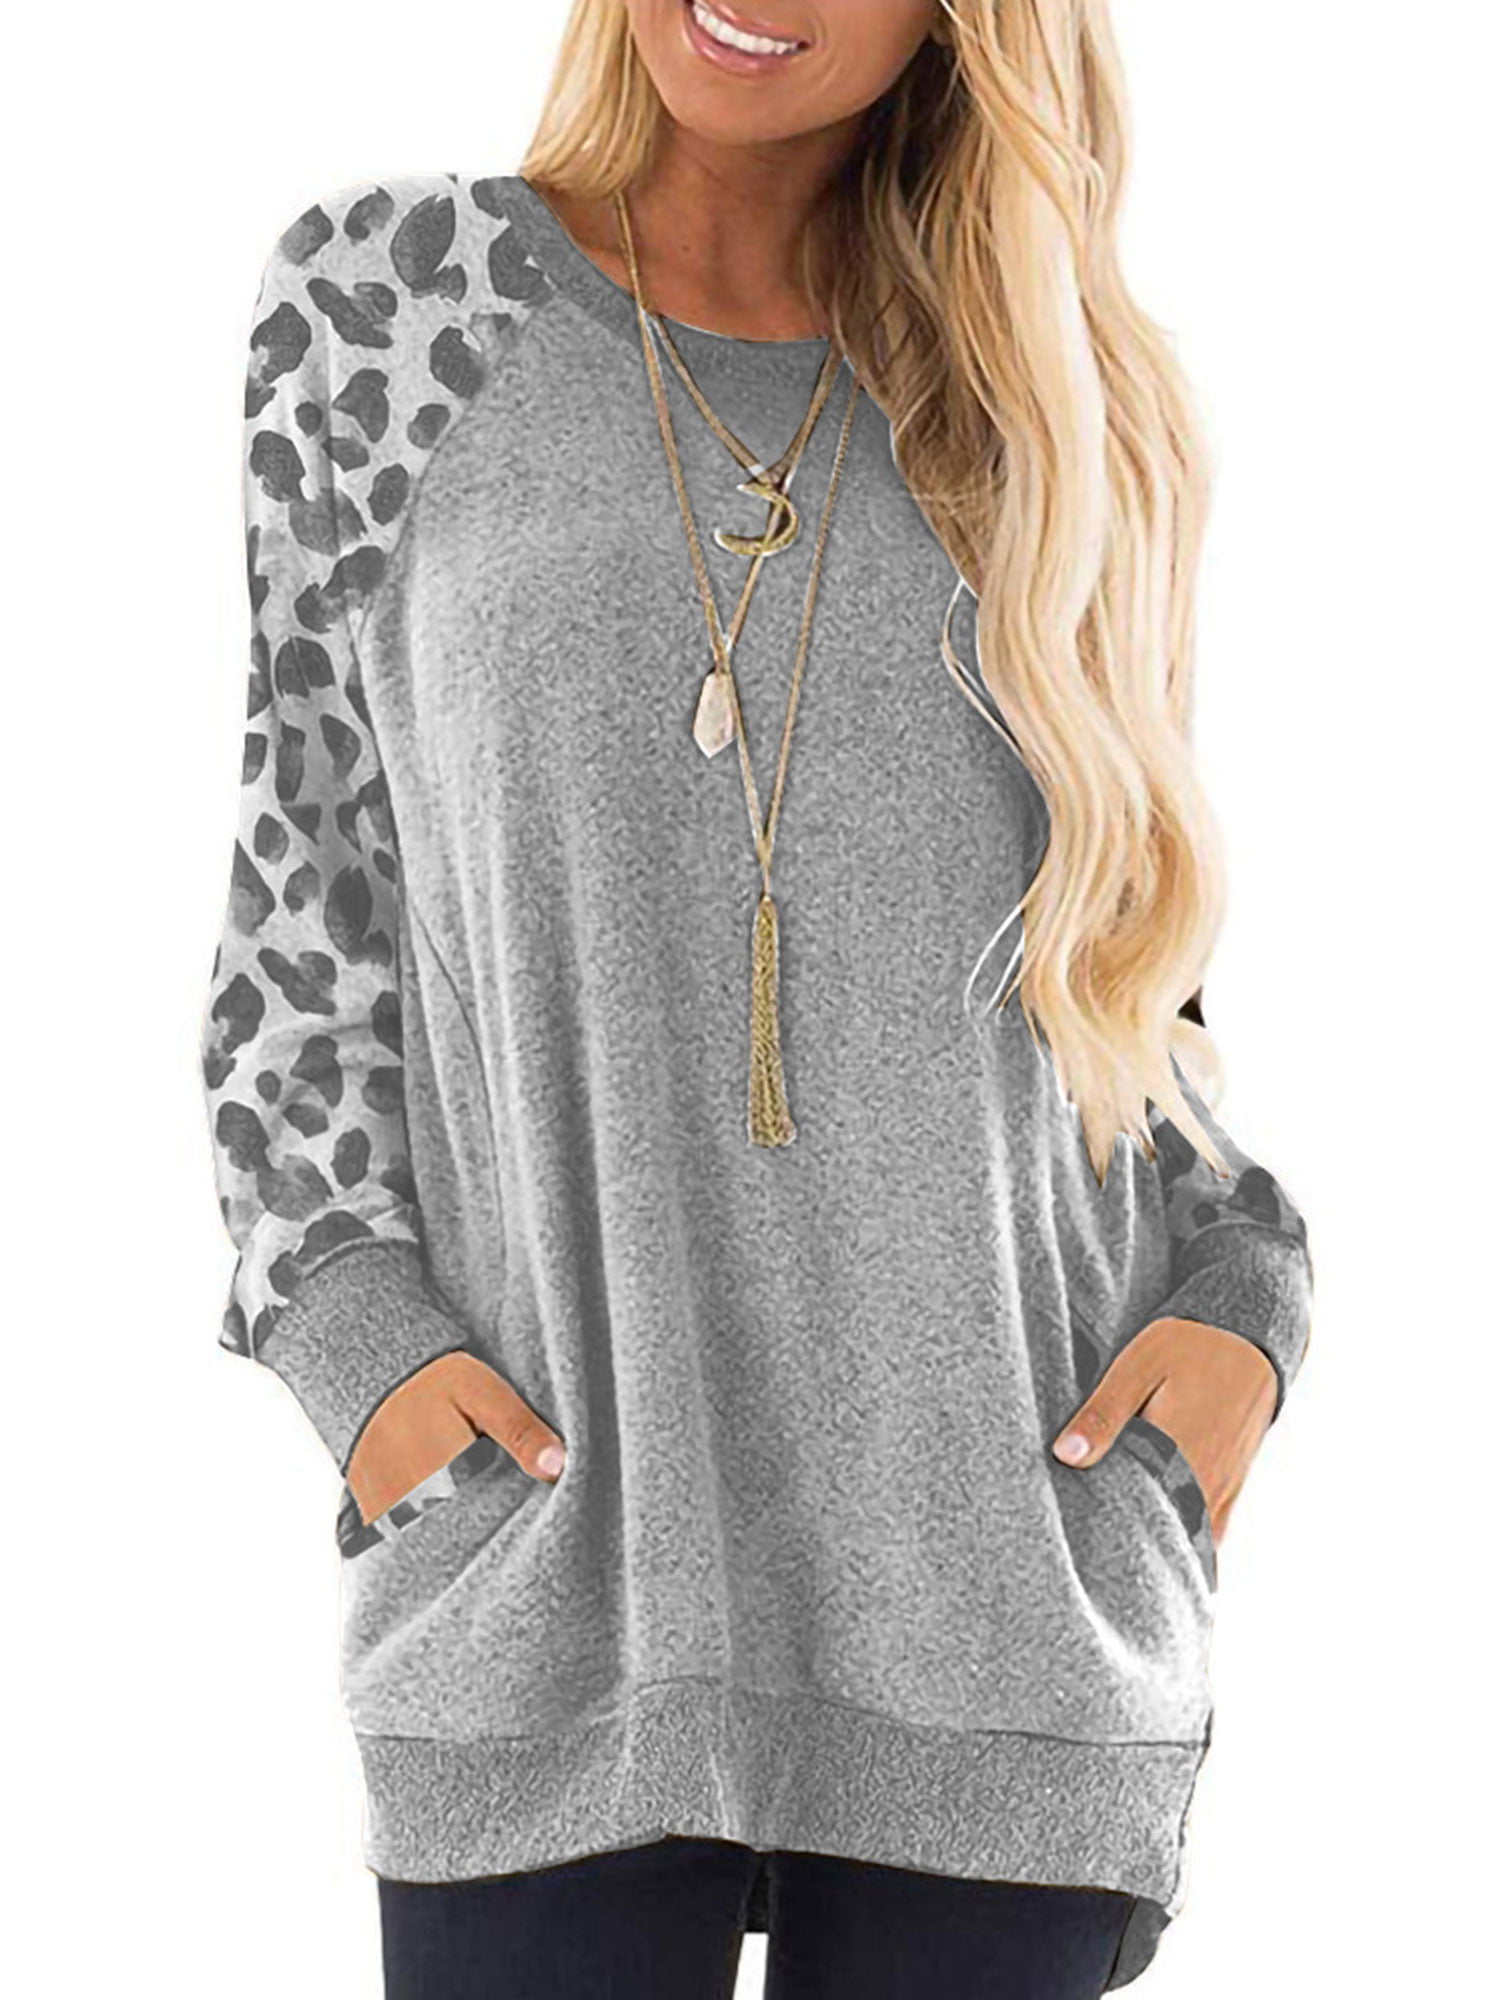 Fainosmny Fashion Womens Leopard Patchwork Sweatshirt T-Shirt Blouse Tops Long Sleeve Oversize Pullover Shirt Tee